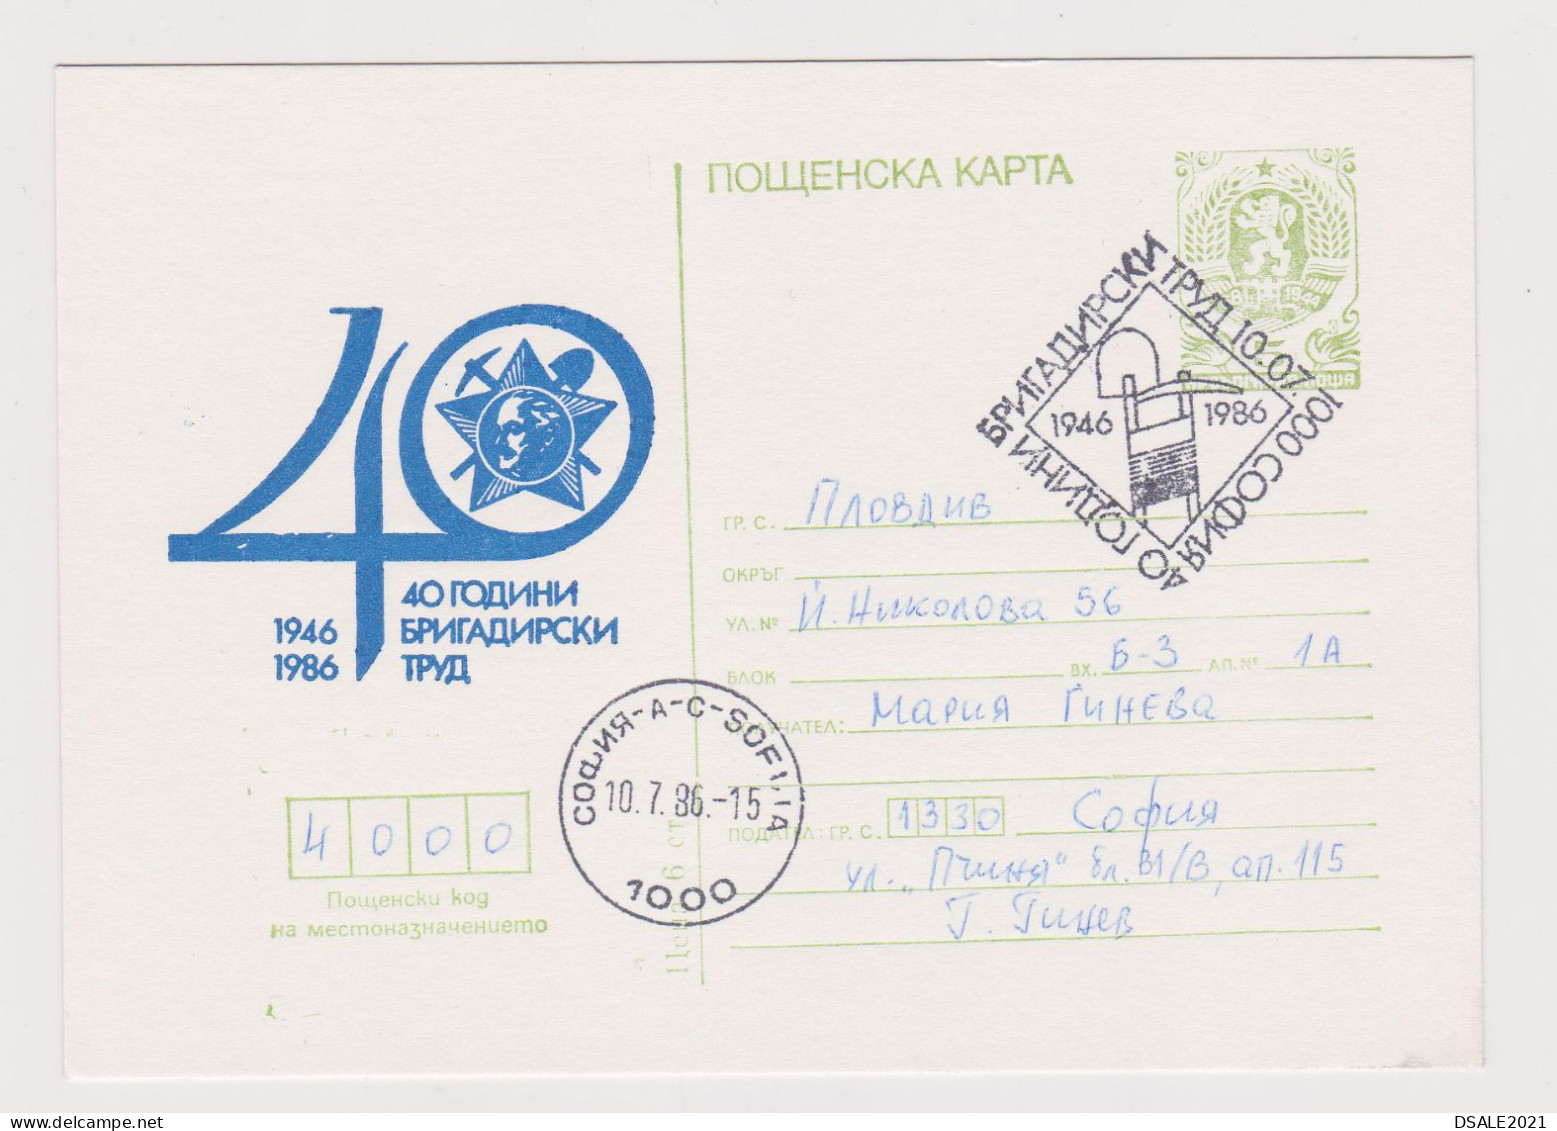 Bulgaria Bulgarie Bulgarien 1986 Postal Stationery Card, Ganzsachen, Entier, 1946 Bulgarian Youth Brigade Movement 67488 - Postcards